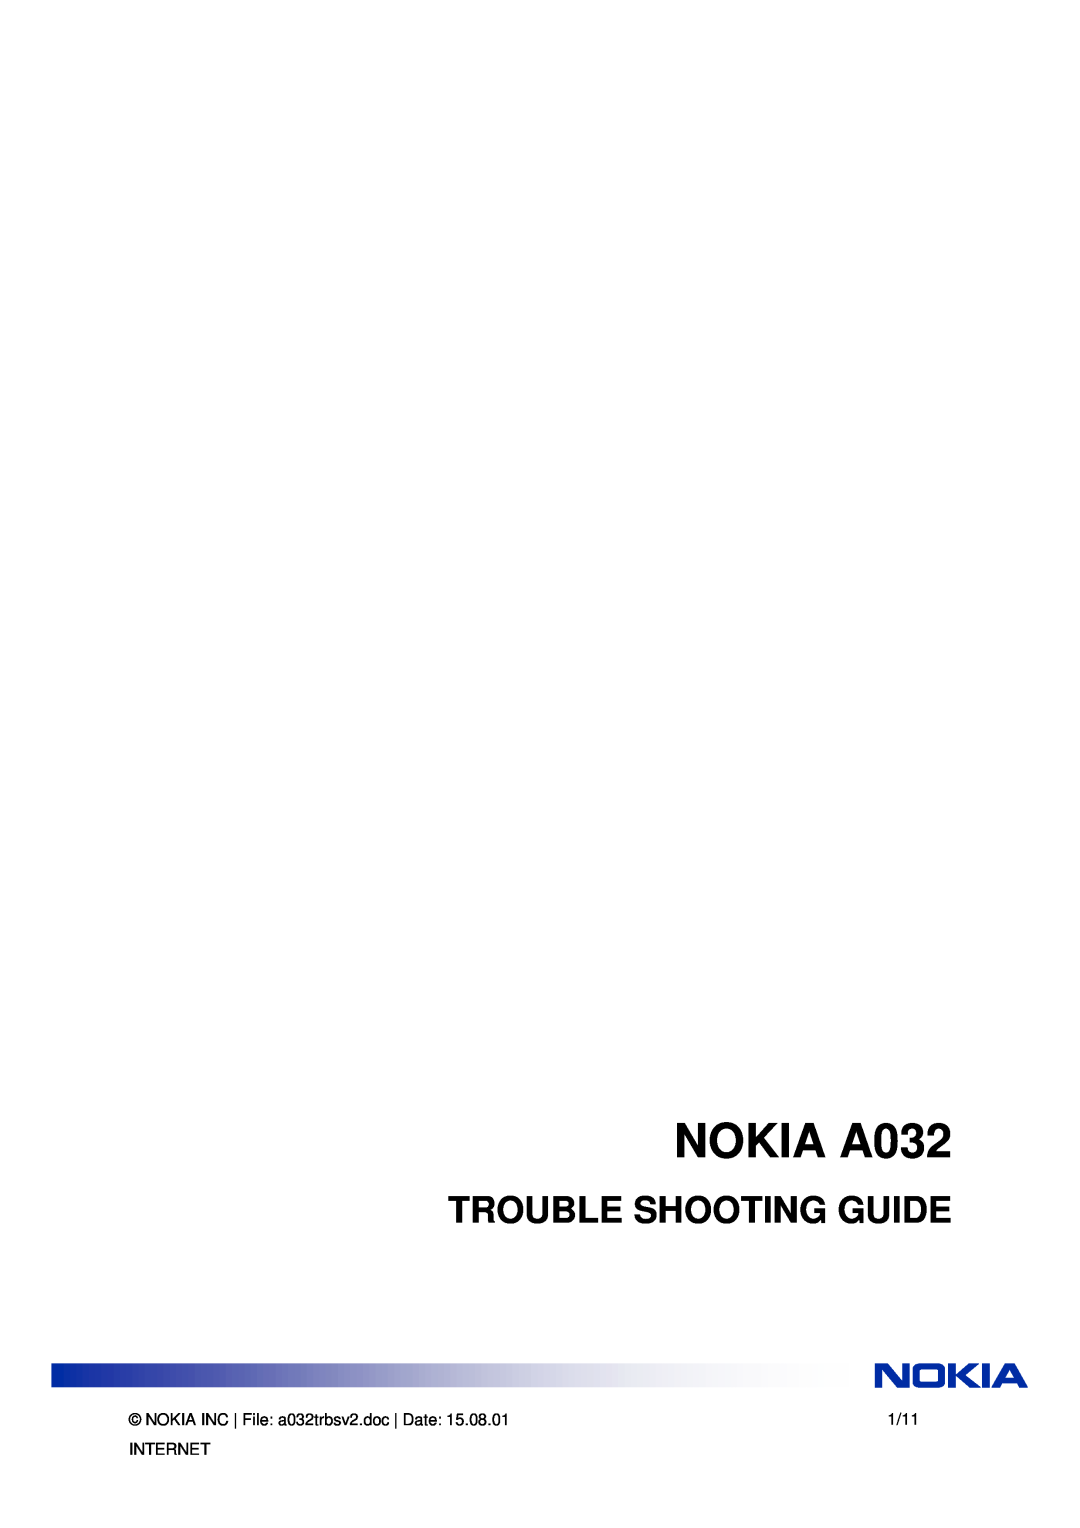 Nokia manual NOKIA A032, Trouble Shooting Guide 